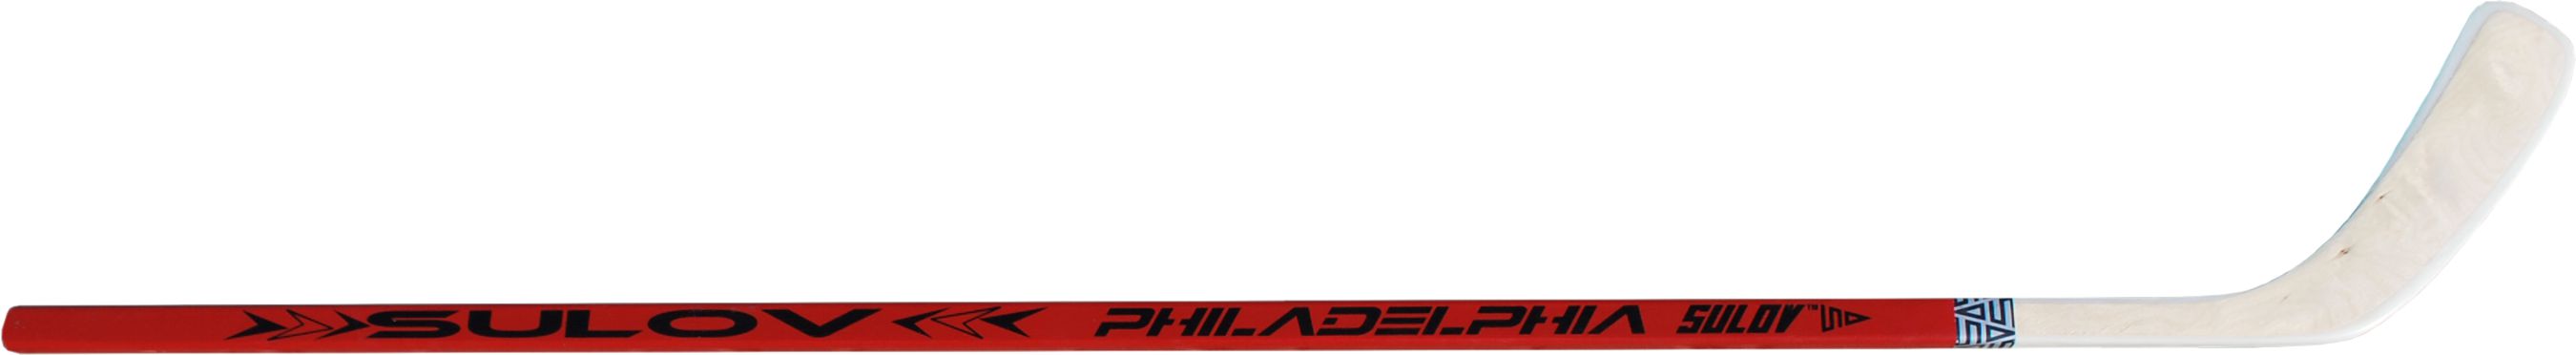 Hokejka SULOV PHILADELPHIA, 145cm, dyha-plast